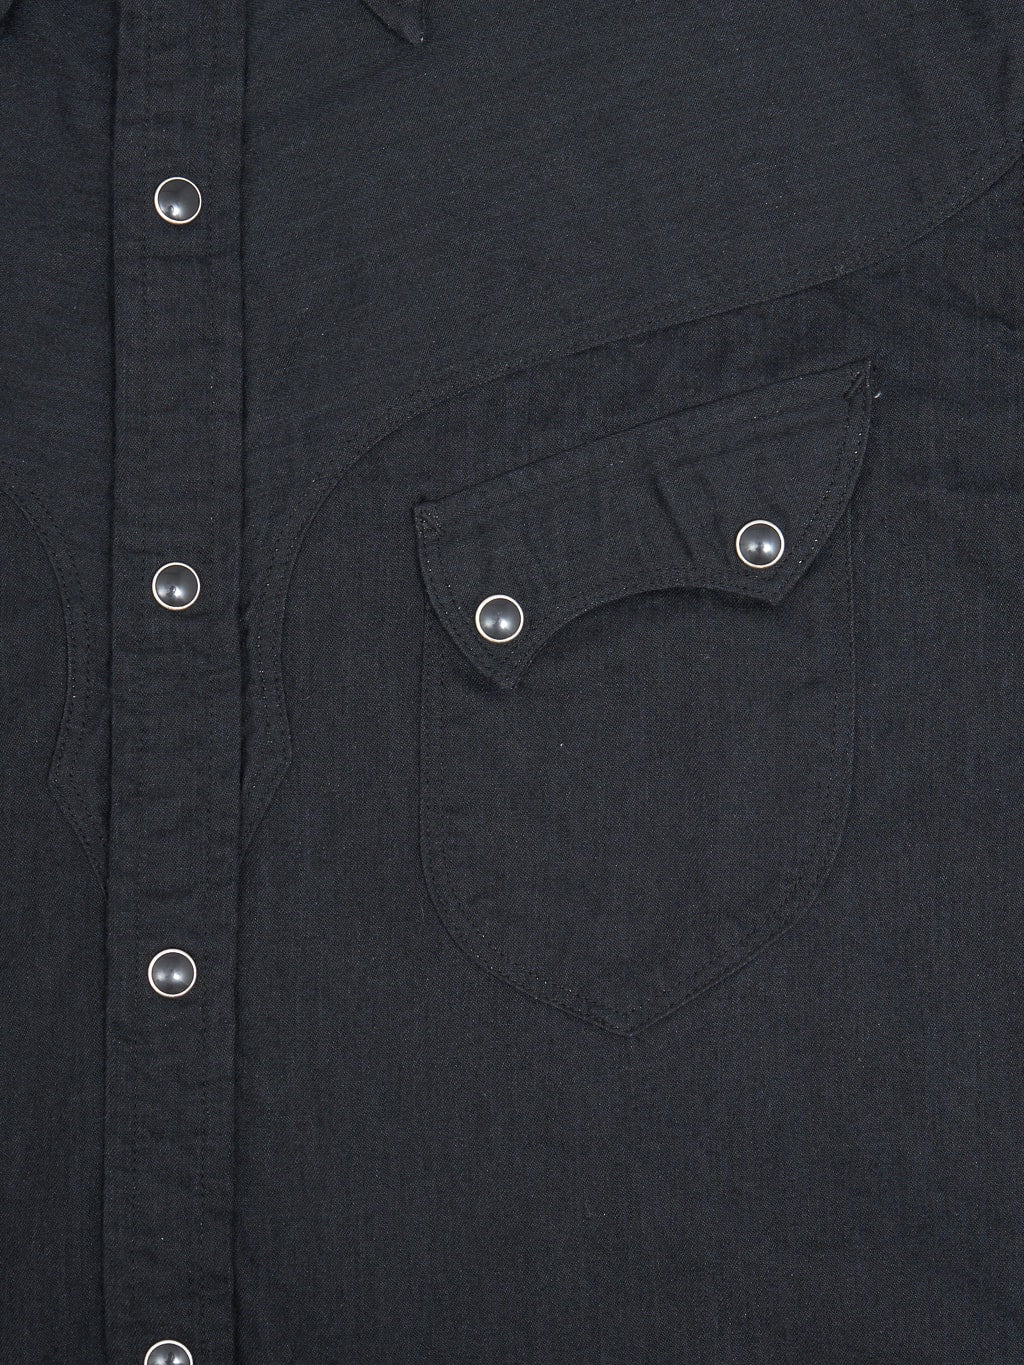 Stevenson Overall Cody Shirt black denim western style 100 cotton